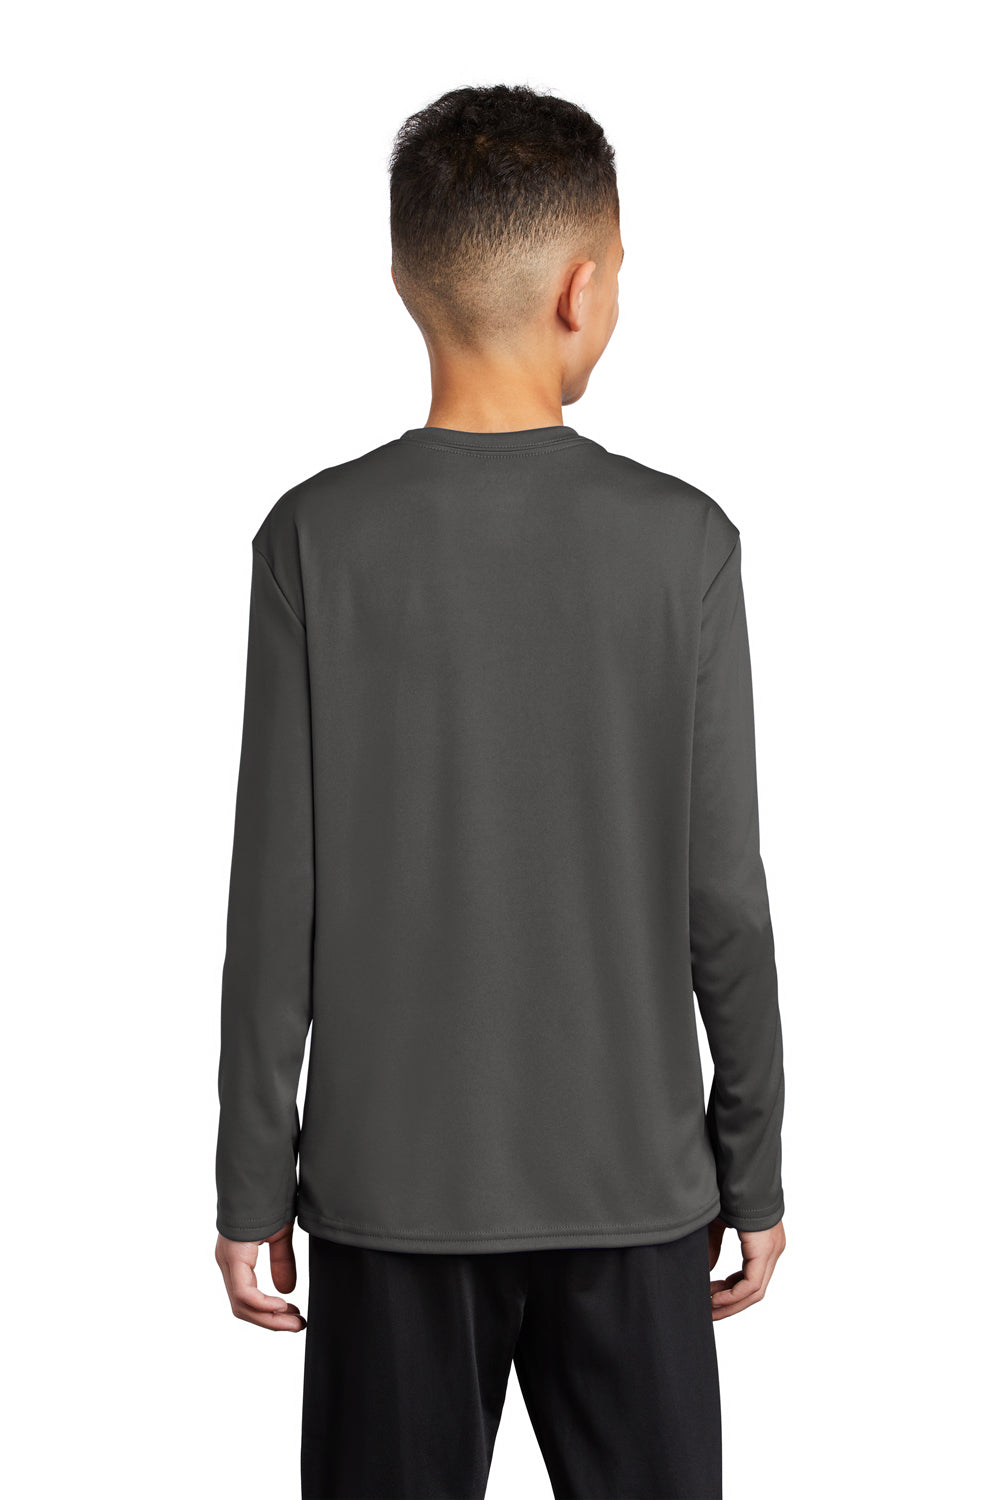 Port & Company Youth Performance Long Sleeve Crewneck T-Shirt Charcoal Grey Side